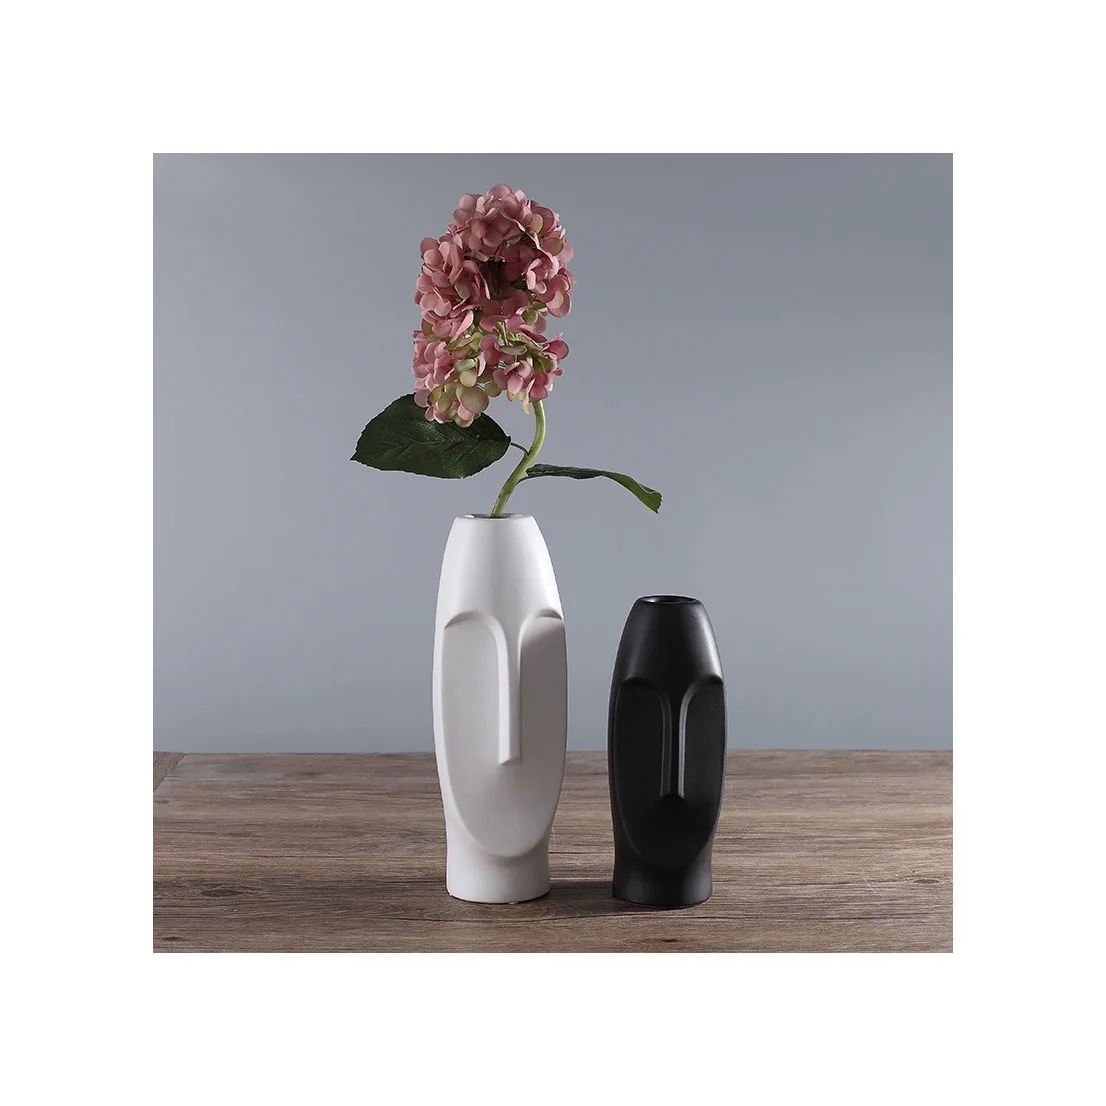 2023 Home decoration Living room furniture Craft ornament Porcelain Abstract human face Ceramic flower vases